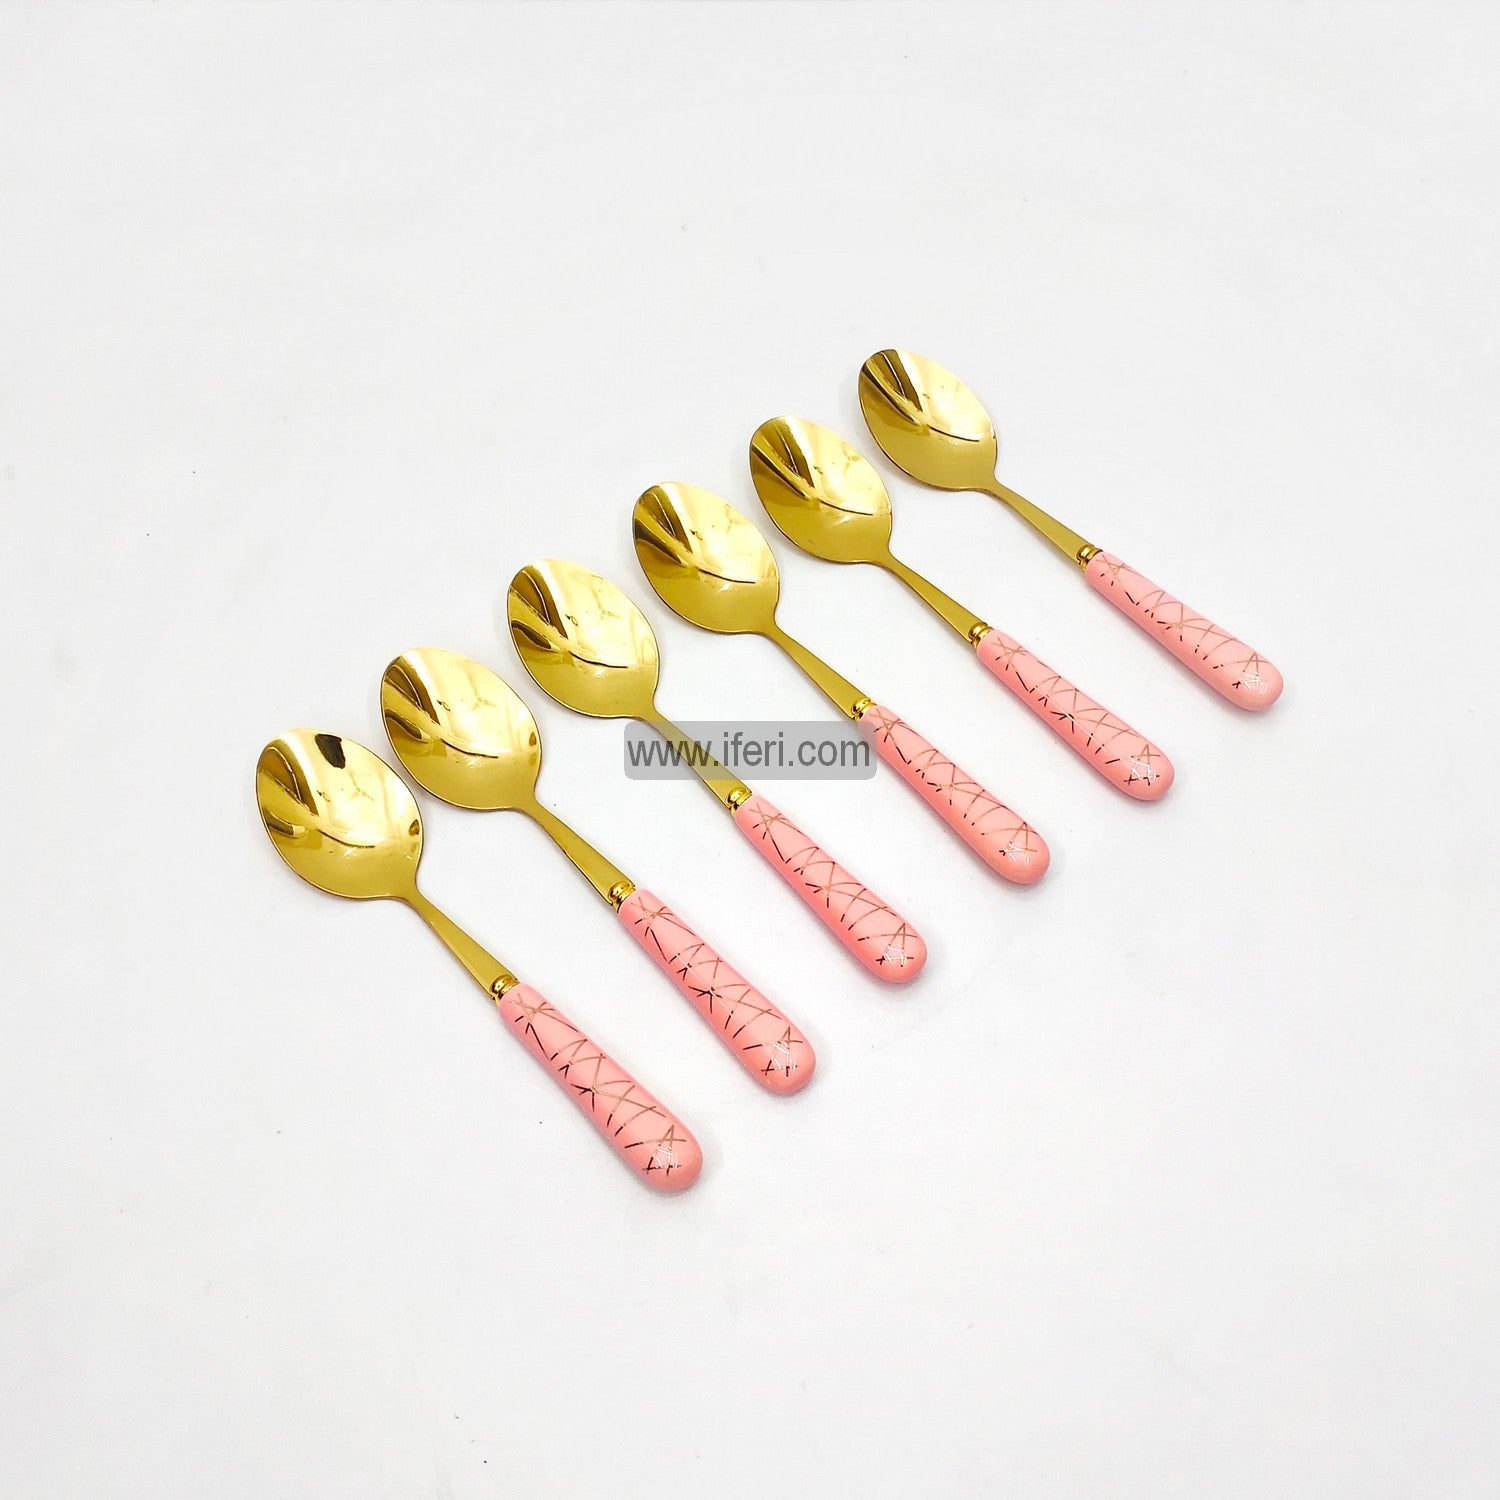 6 Pcs Ceramic Handle Metal Tea Spoon Set TG10366